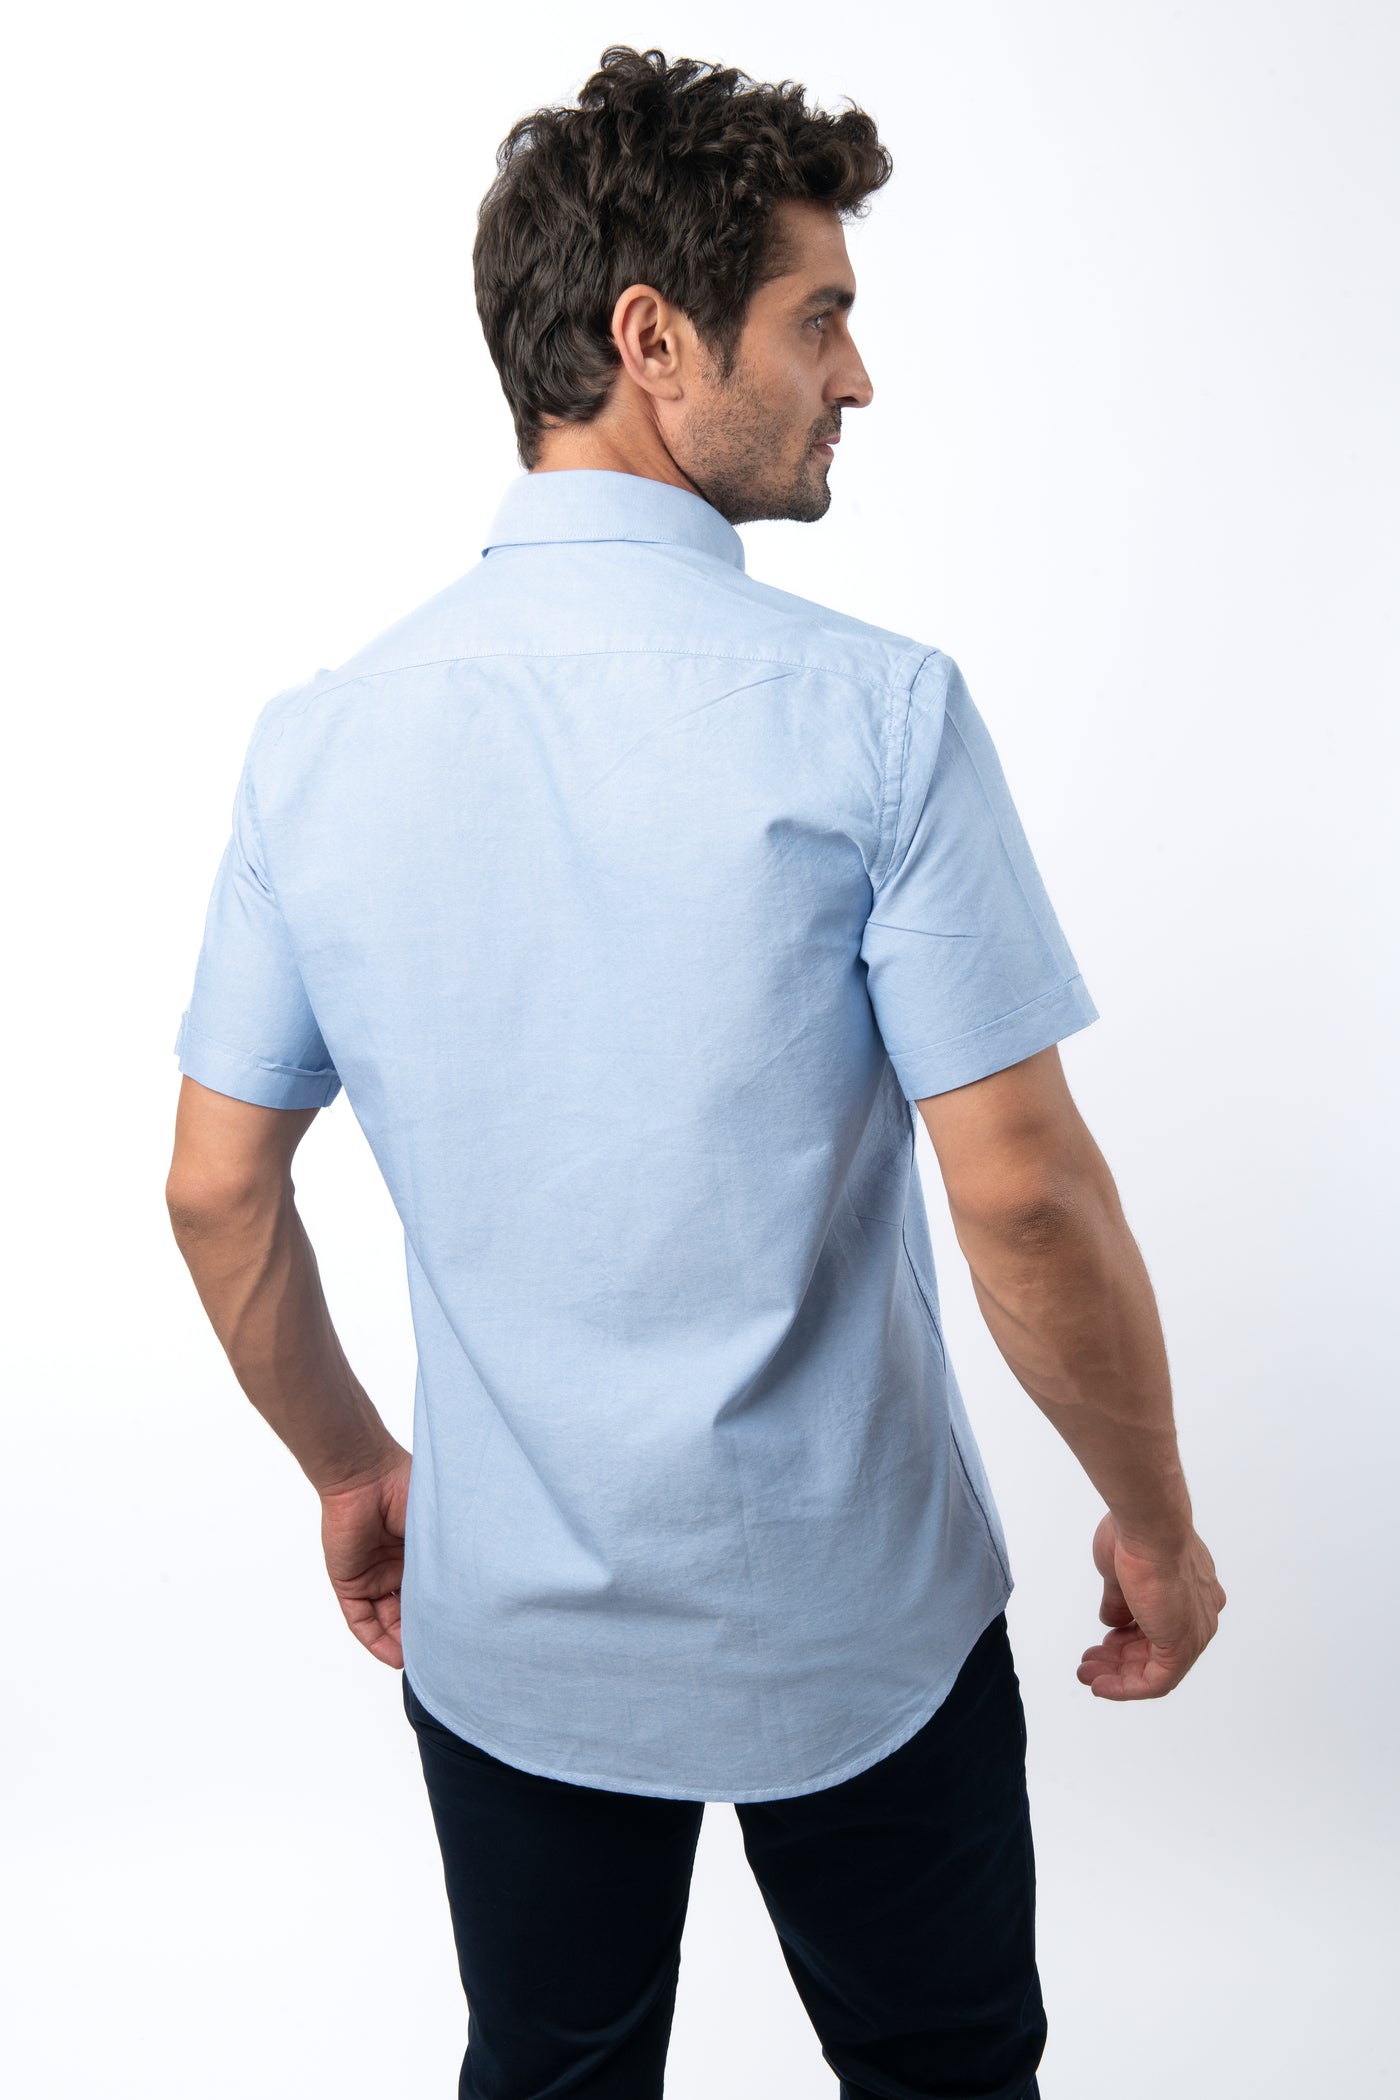 Oxford Light Blue Cotton Short Sleeves Shirt